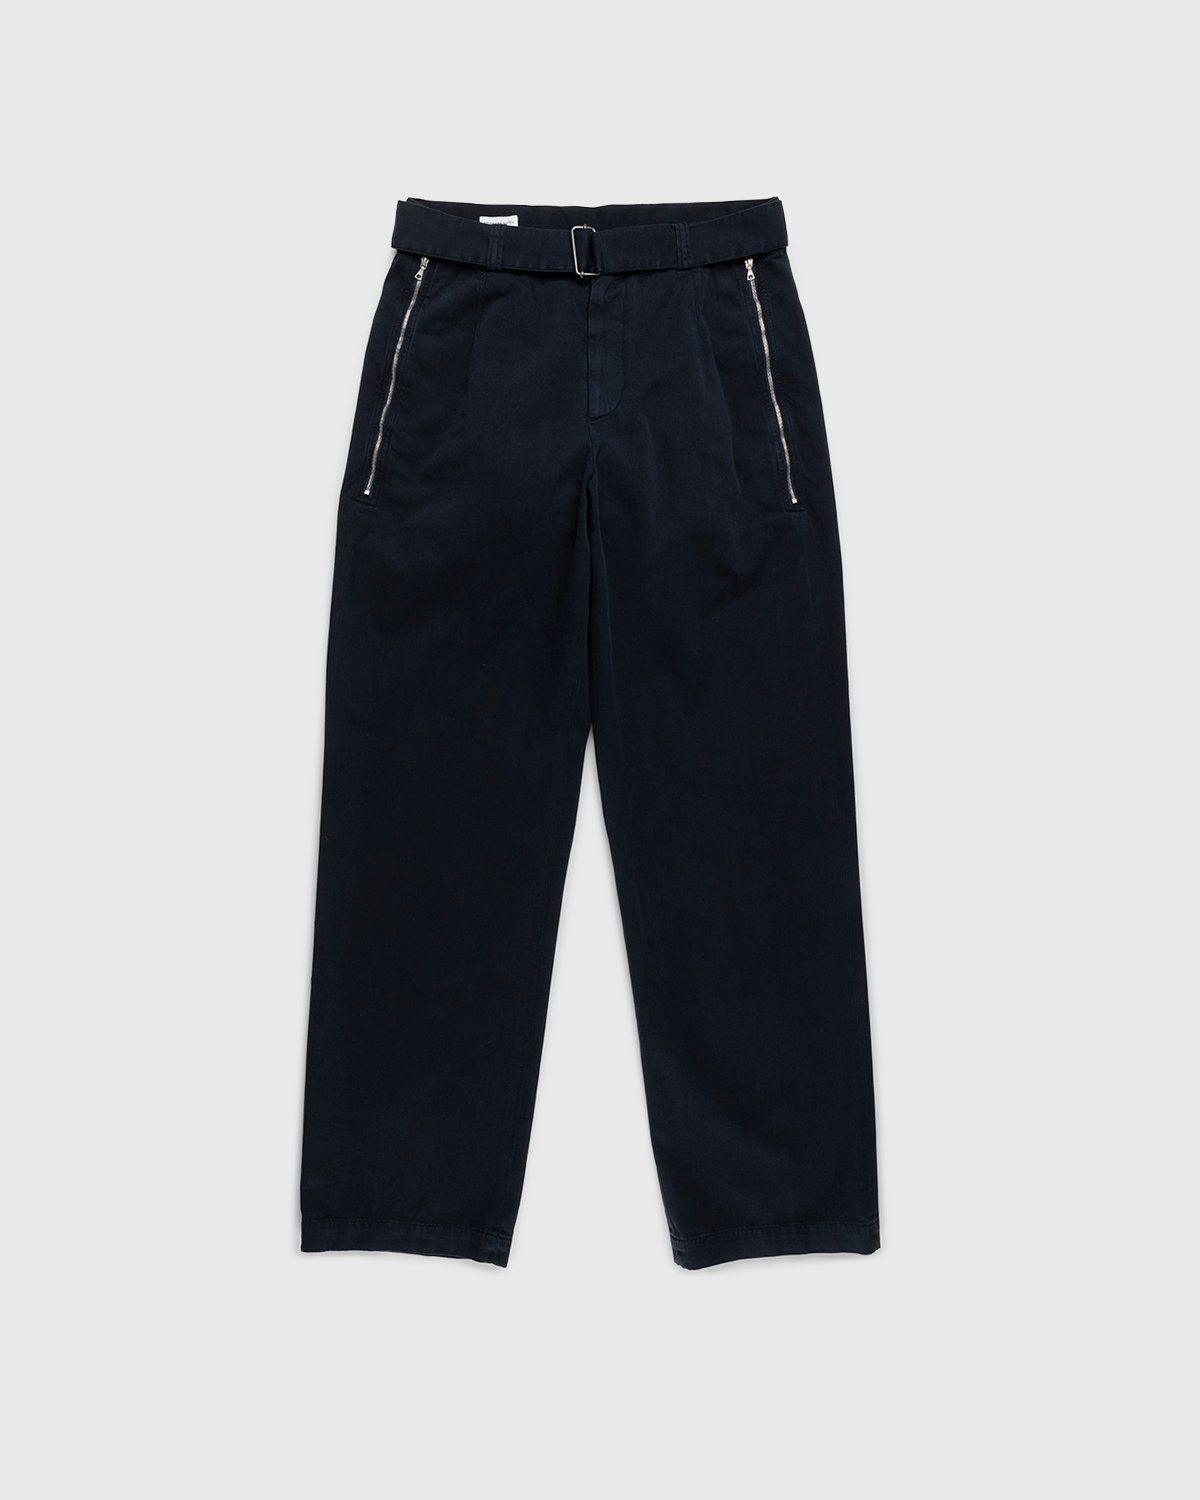 Dries van Noten – Penson Pants Navy - Pants - Blue - Image 1